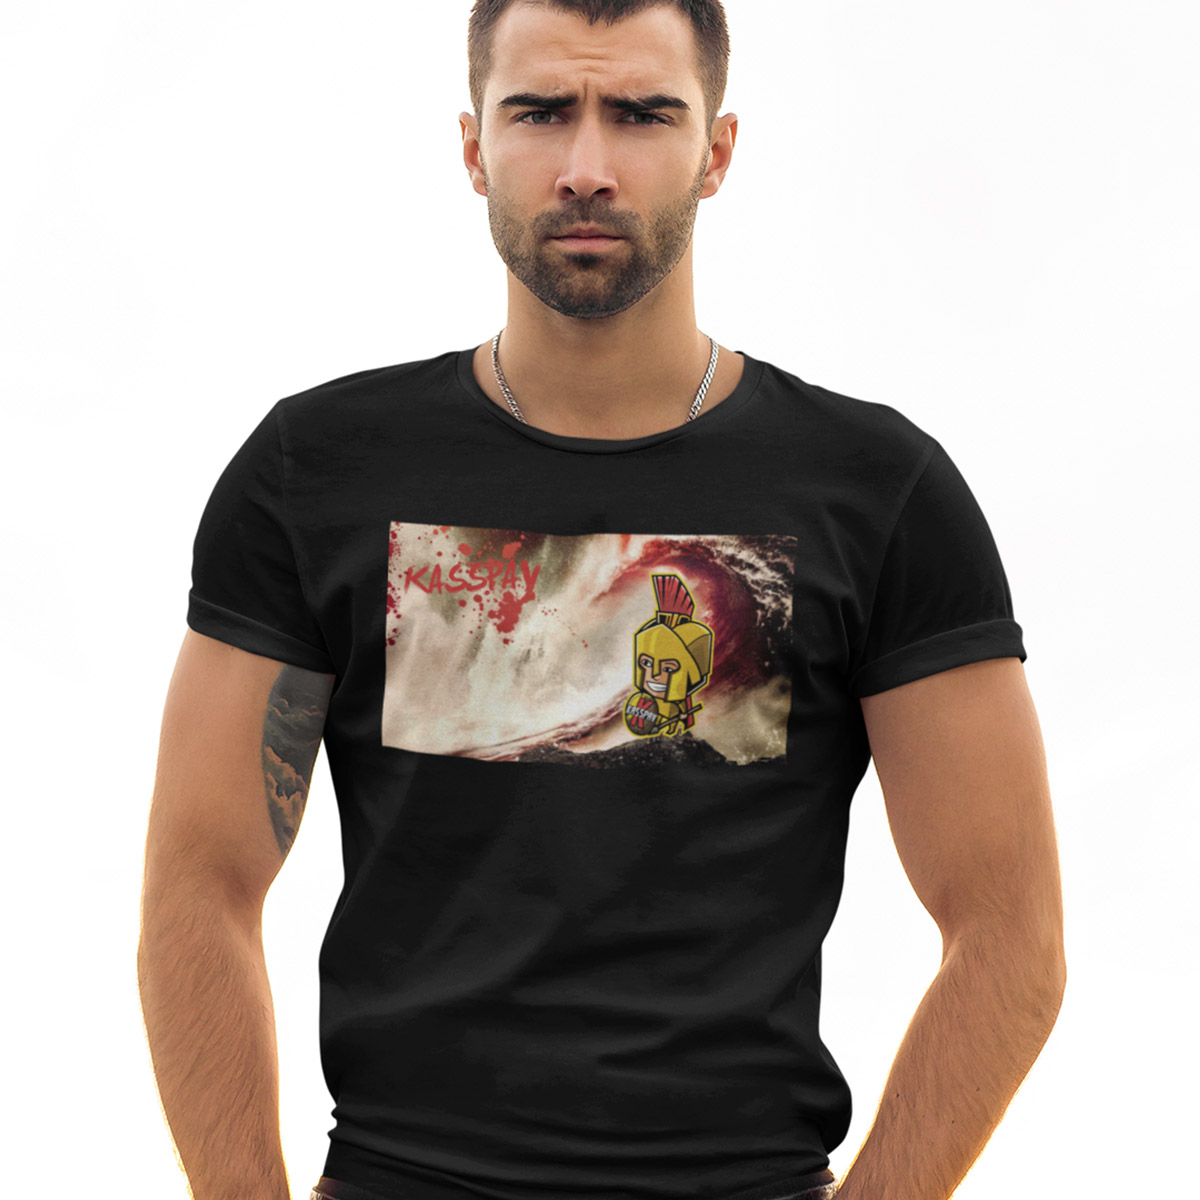 Kasspav-Epic-T-Shirt.jpg